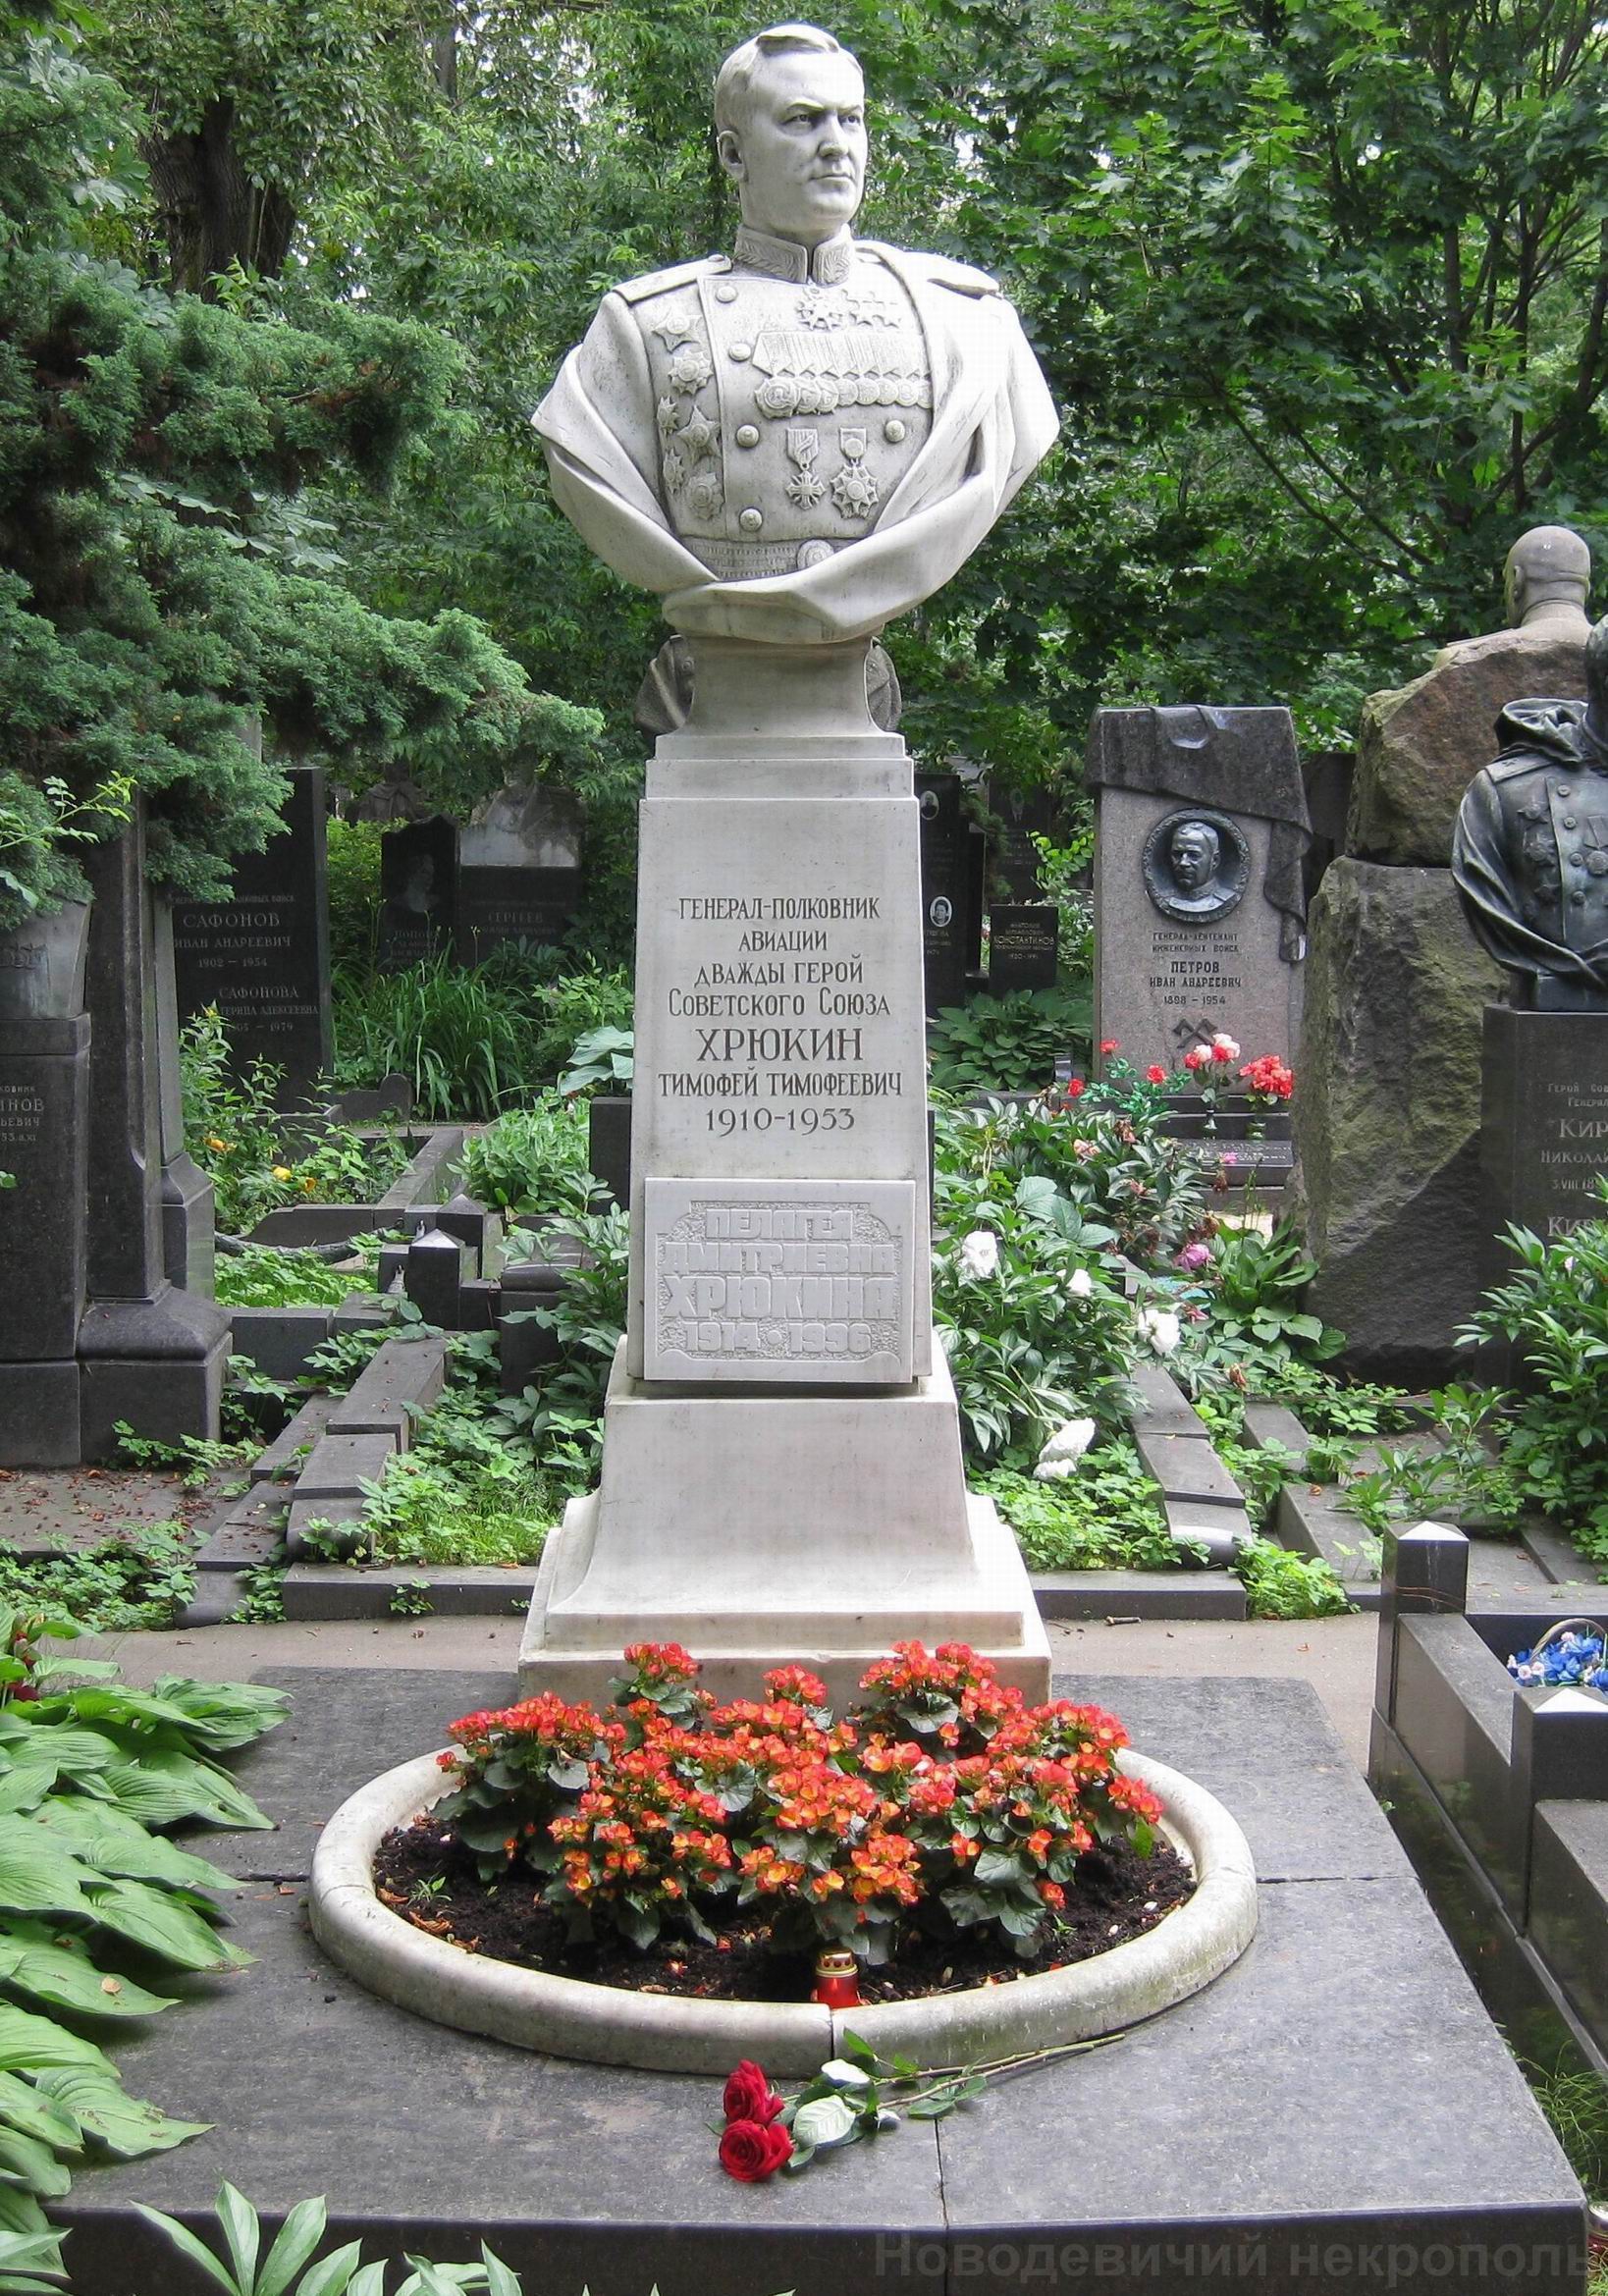 Памятник на могиле Хрюкина Т.Т. (1910-1953), ск. Е.Вучетич, на Новодевичьем кладбище (4-22-17).